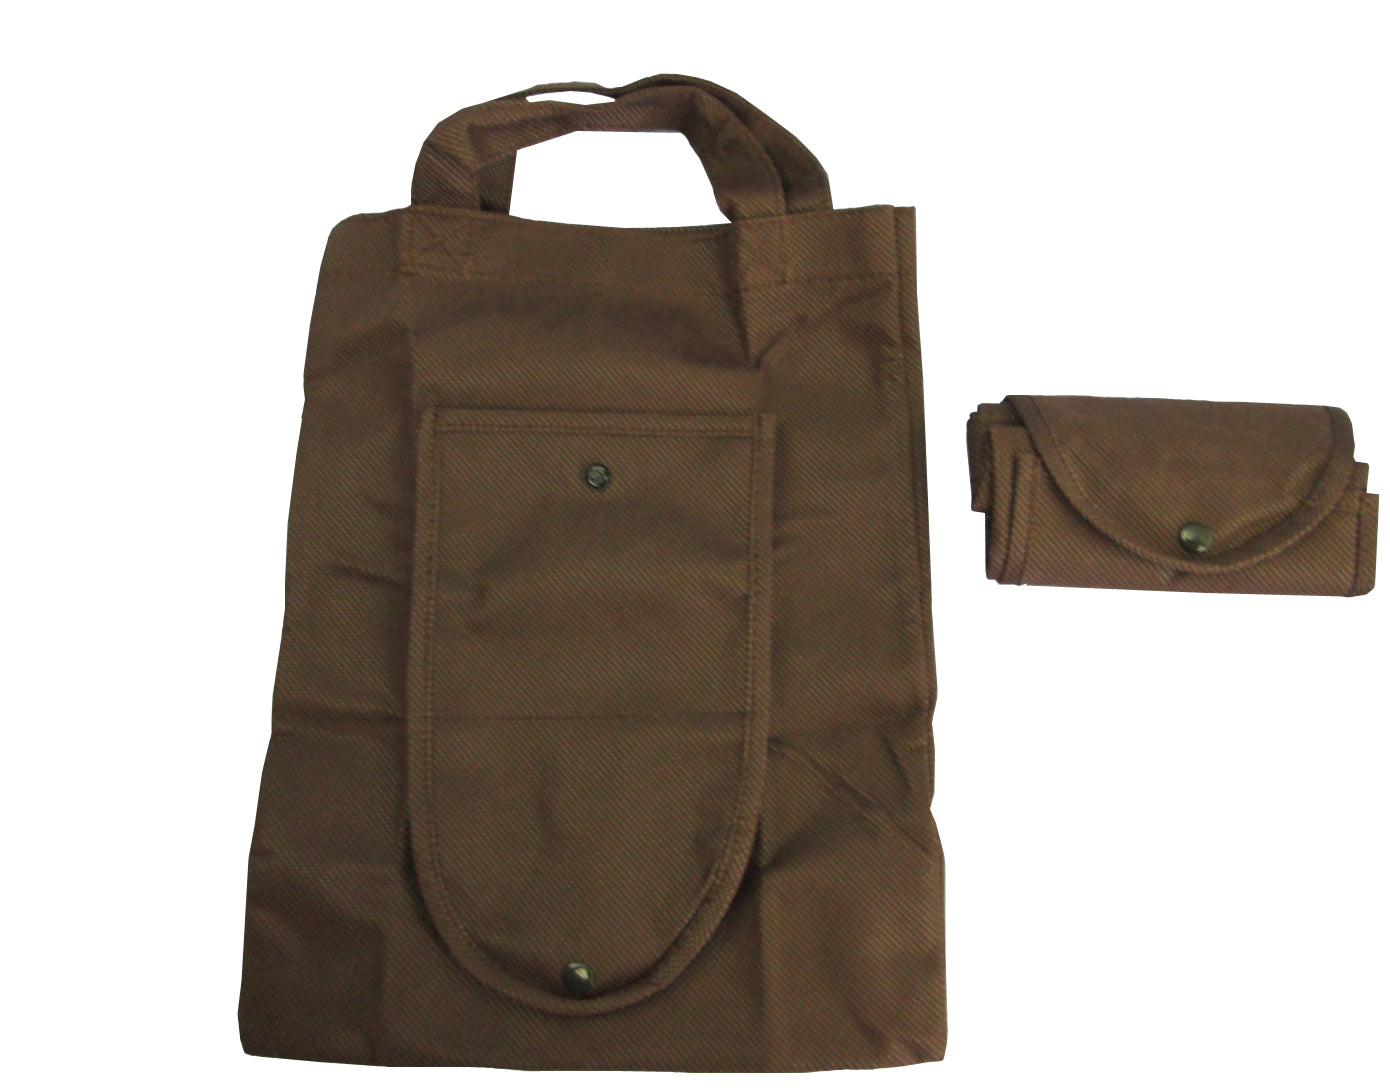 JLSP-0001 Shopping Bag